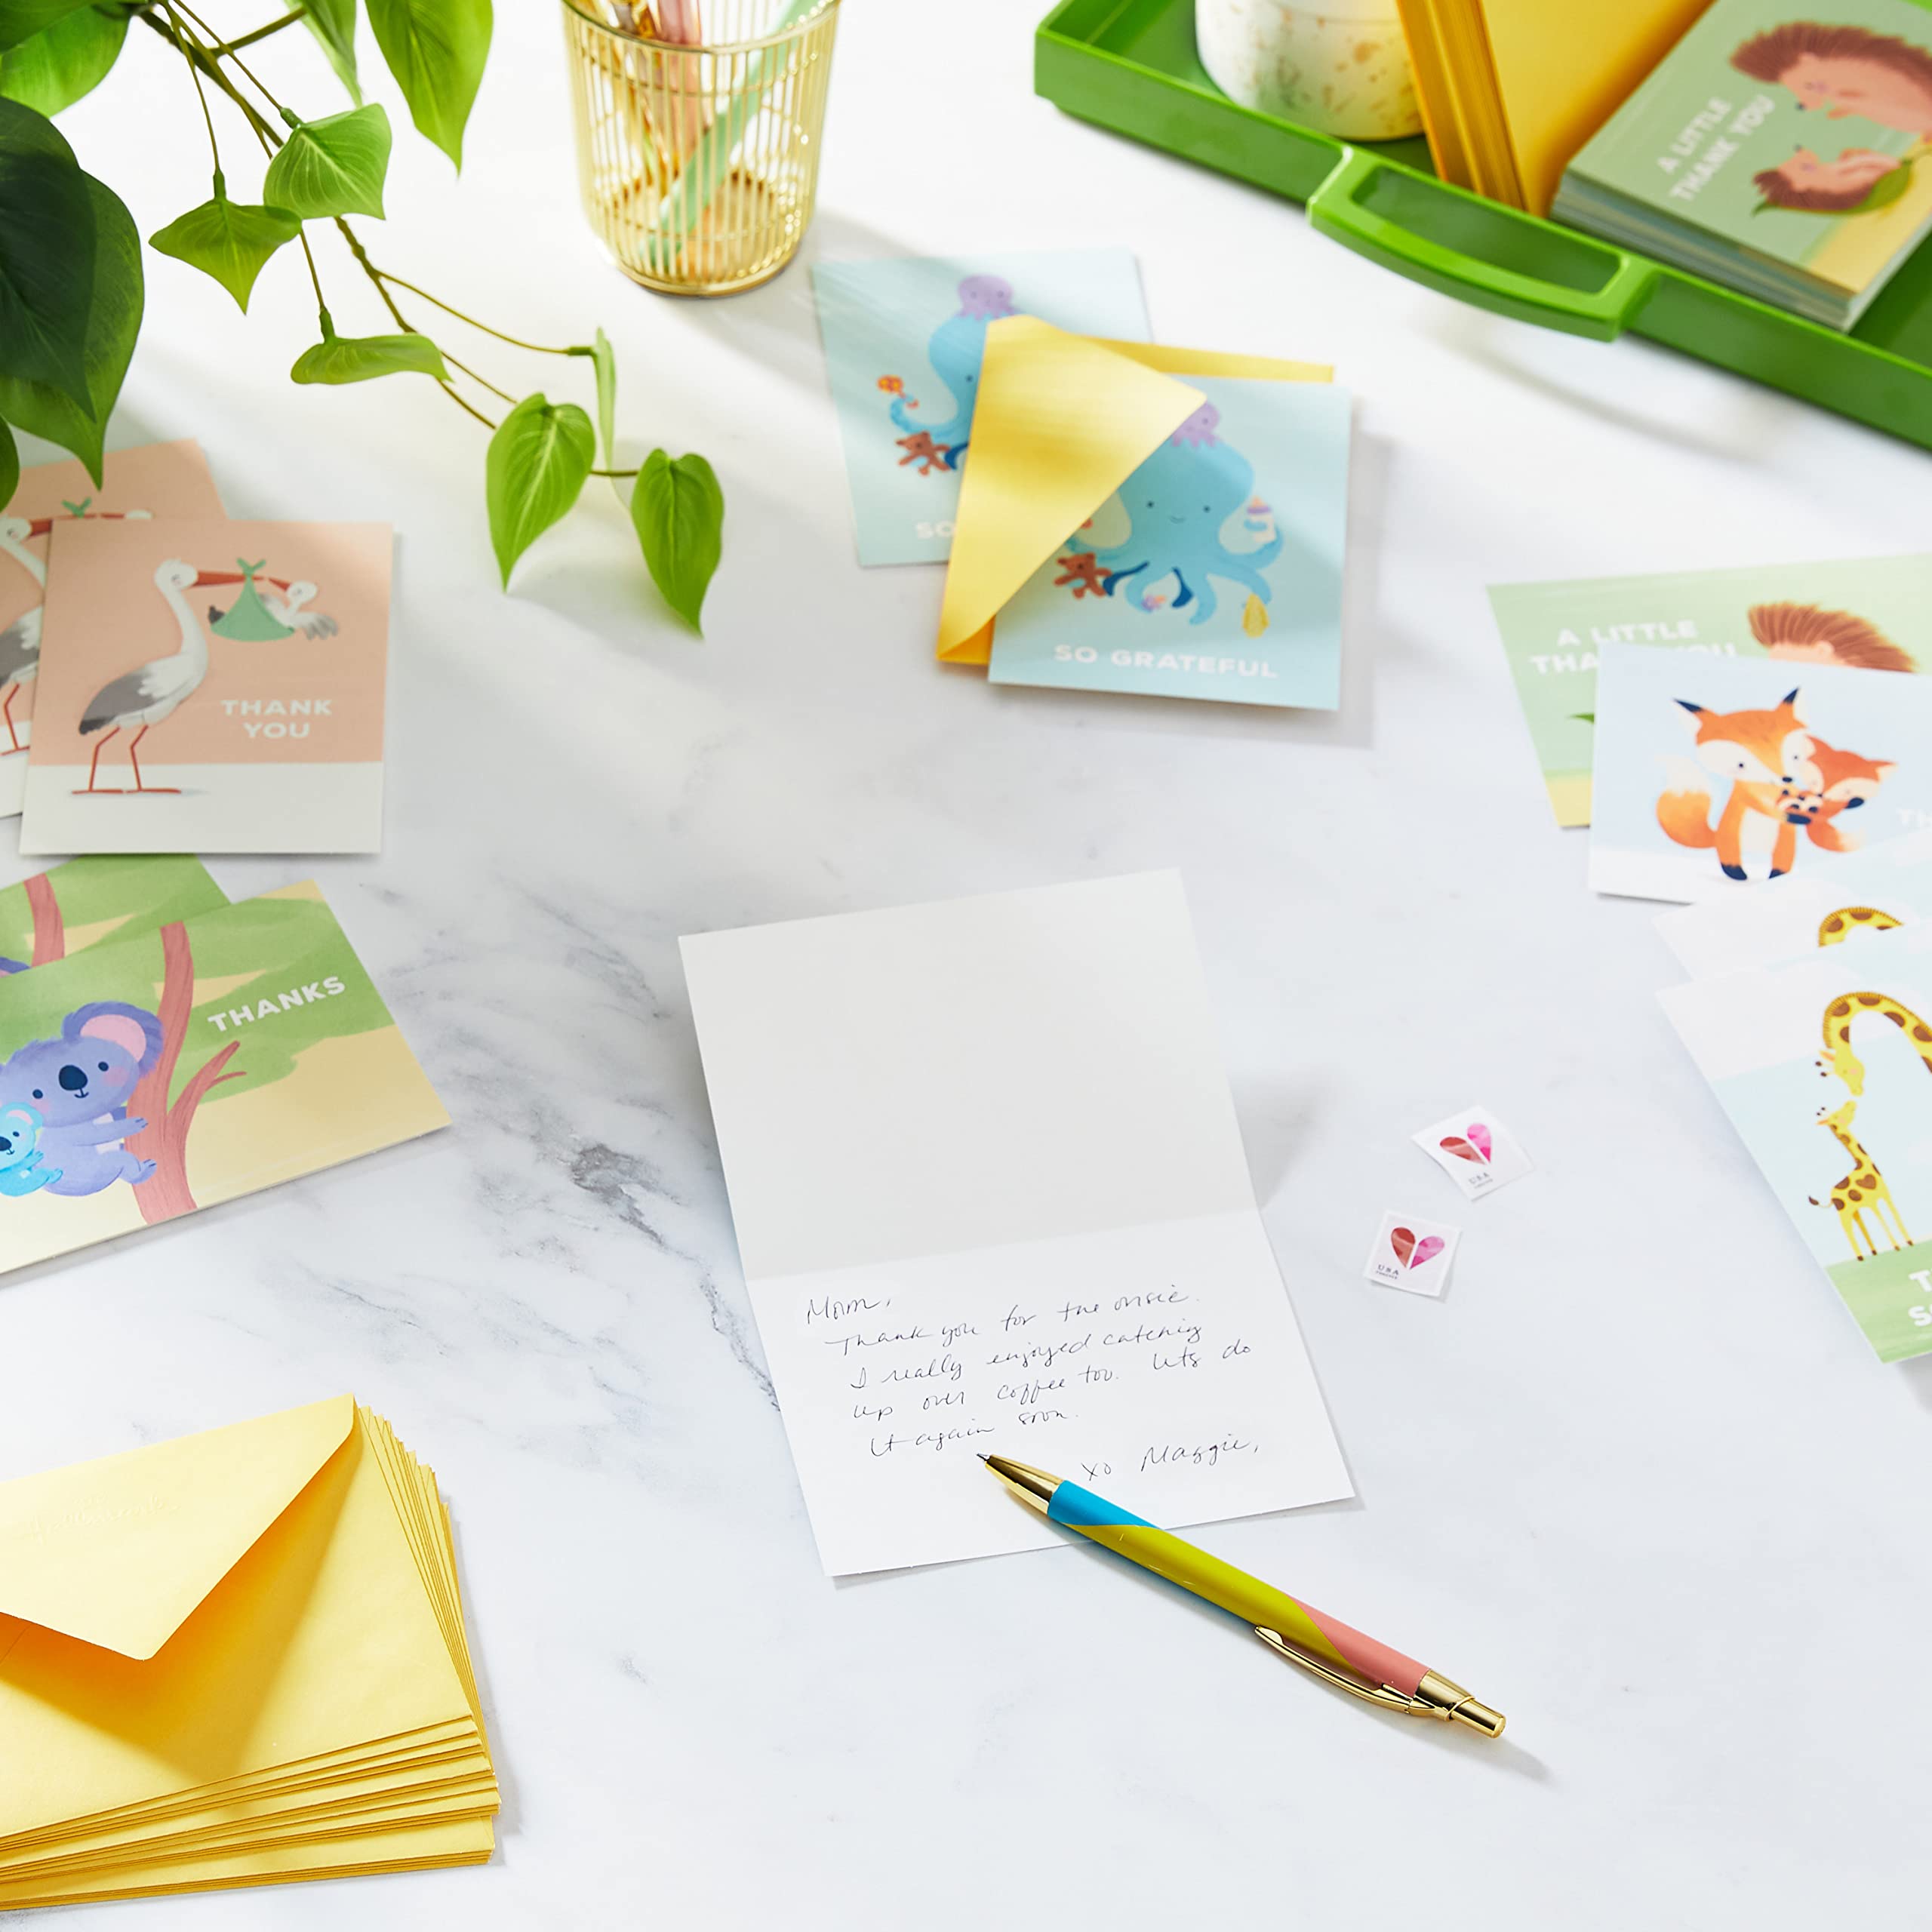 Hallmark Baby Shower Thank You Cards Assortment, Baby Animals (48 Cards and Envelopes—Stork, Giraffes, Koalas, Octopus, Fox, Hedgehogs)